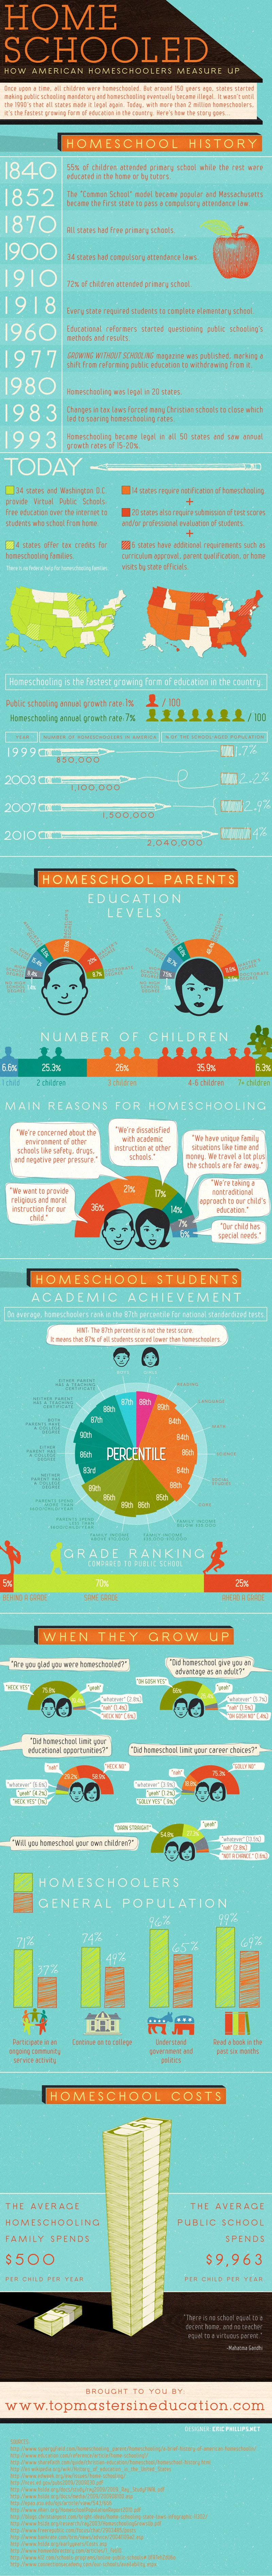 Homeschooled: How American Homeschoolers Measure Up